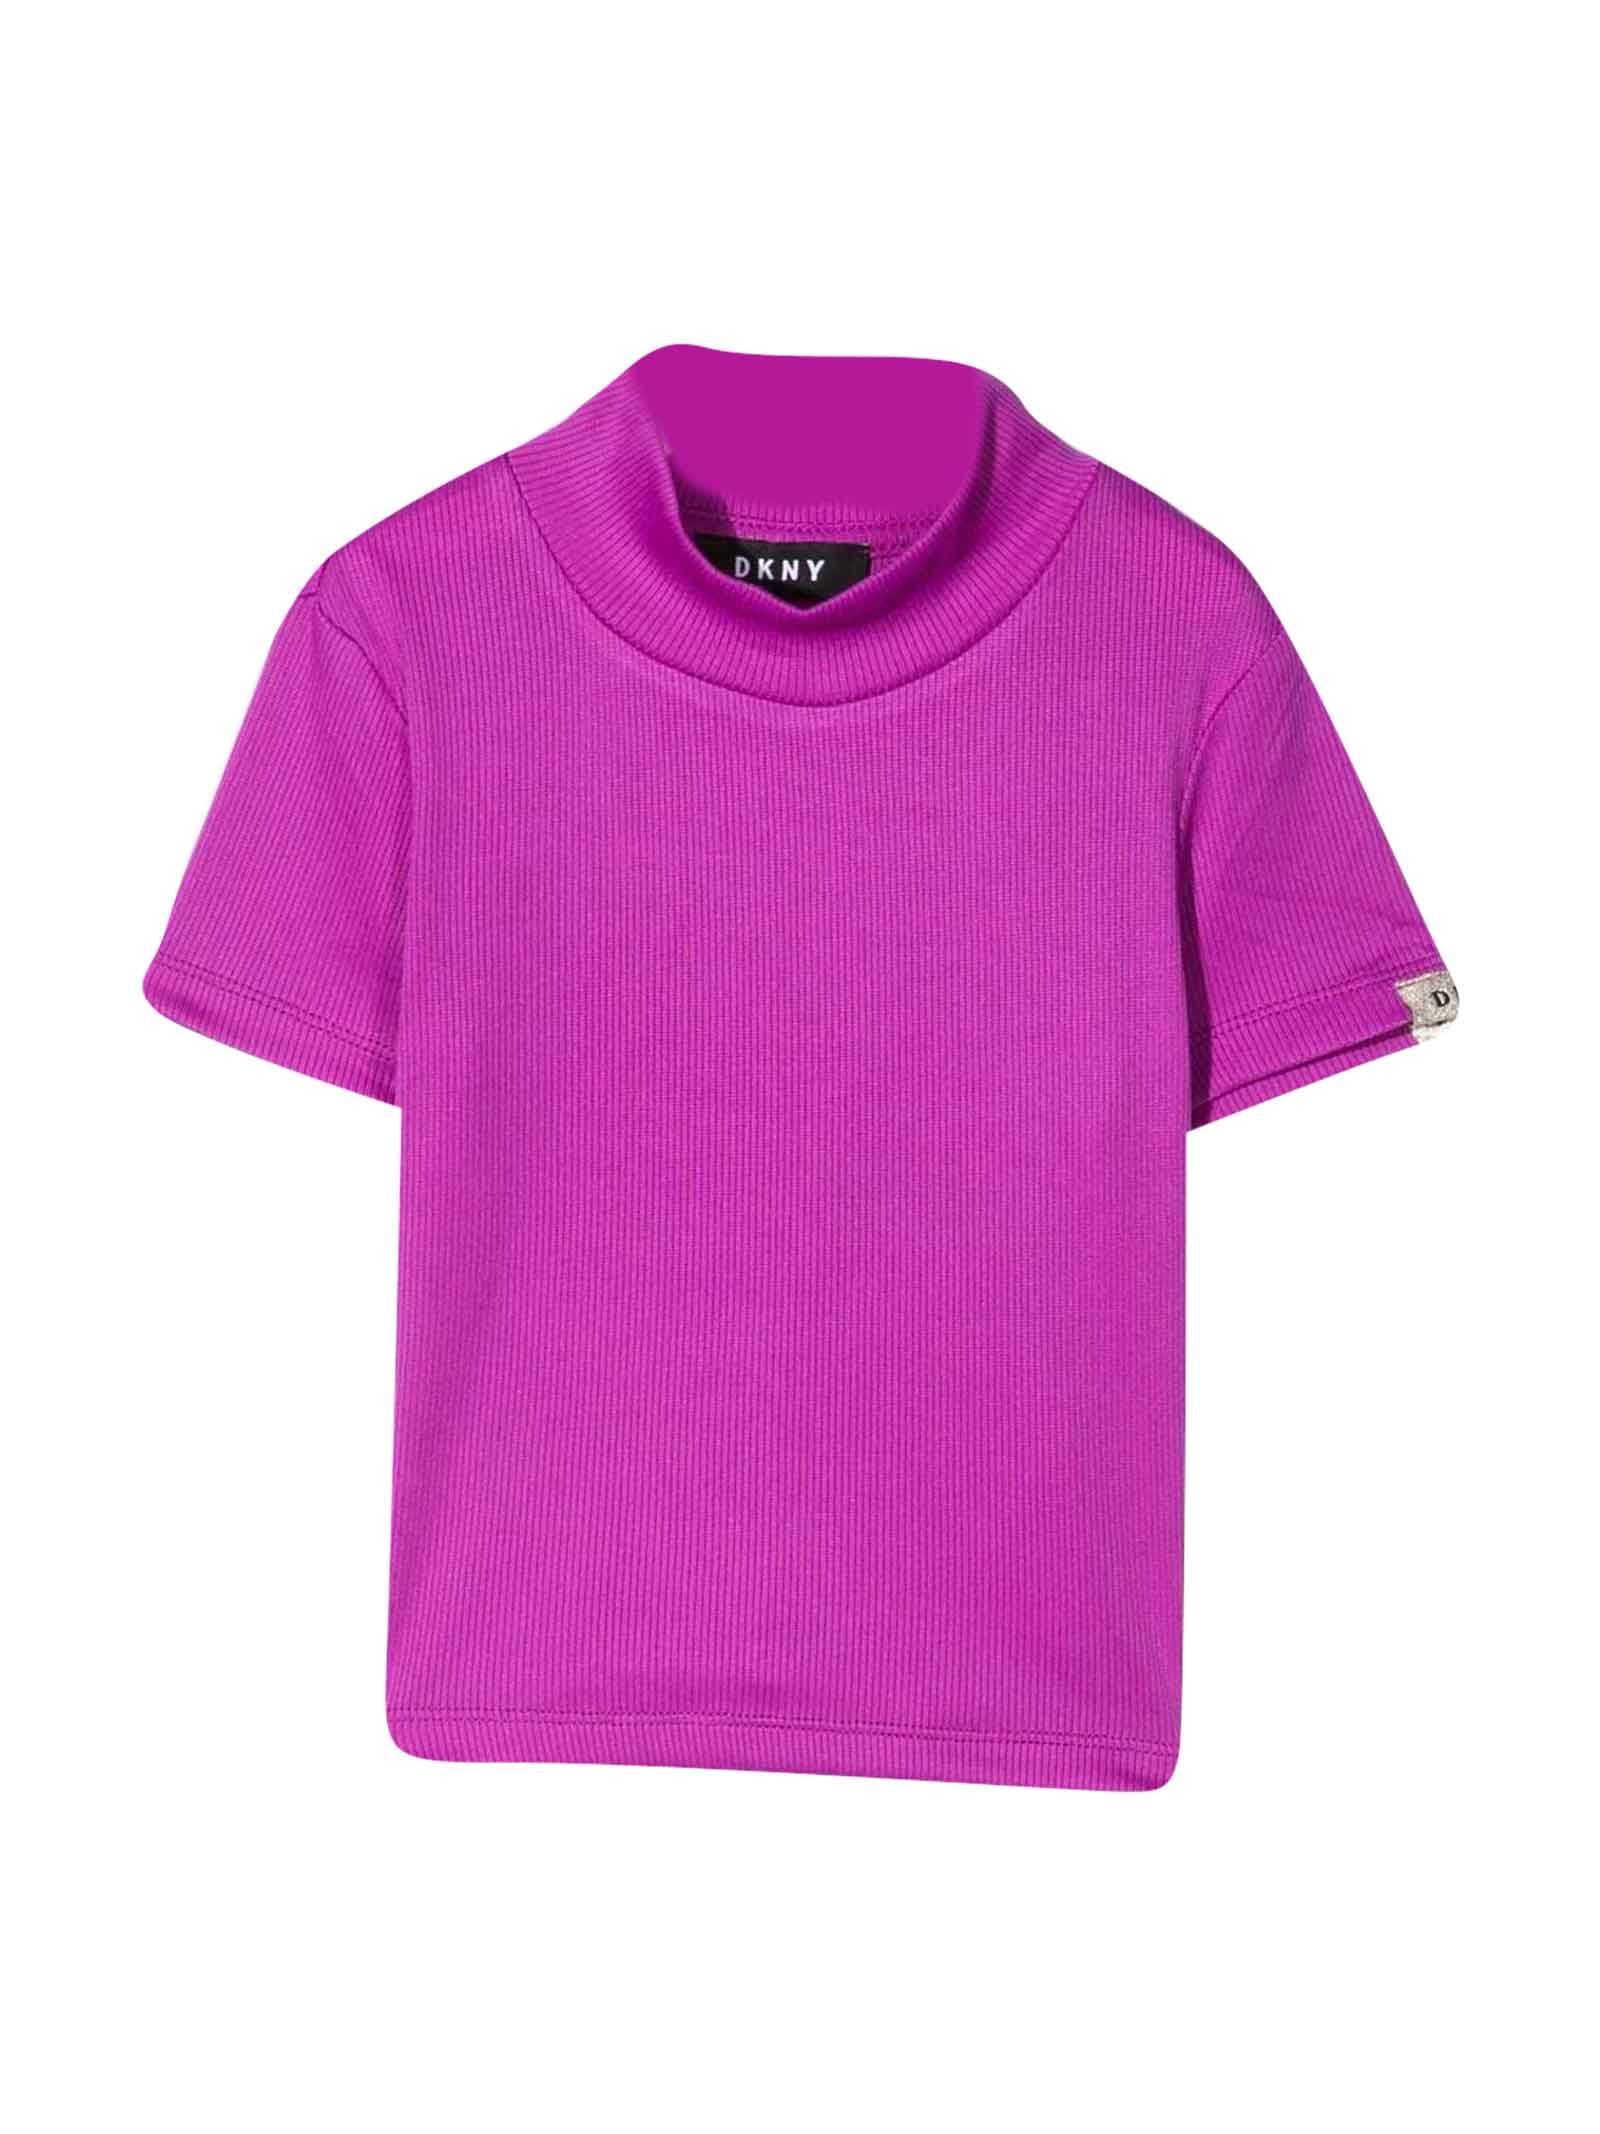 DKNY Purple T-shirt Teen Unisex